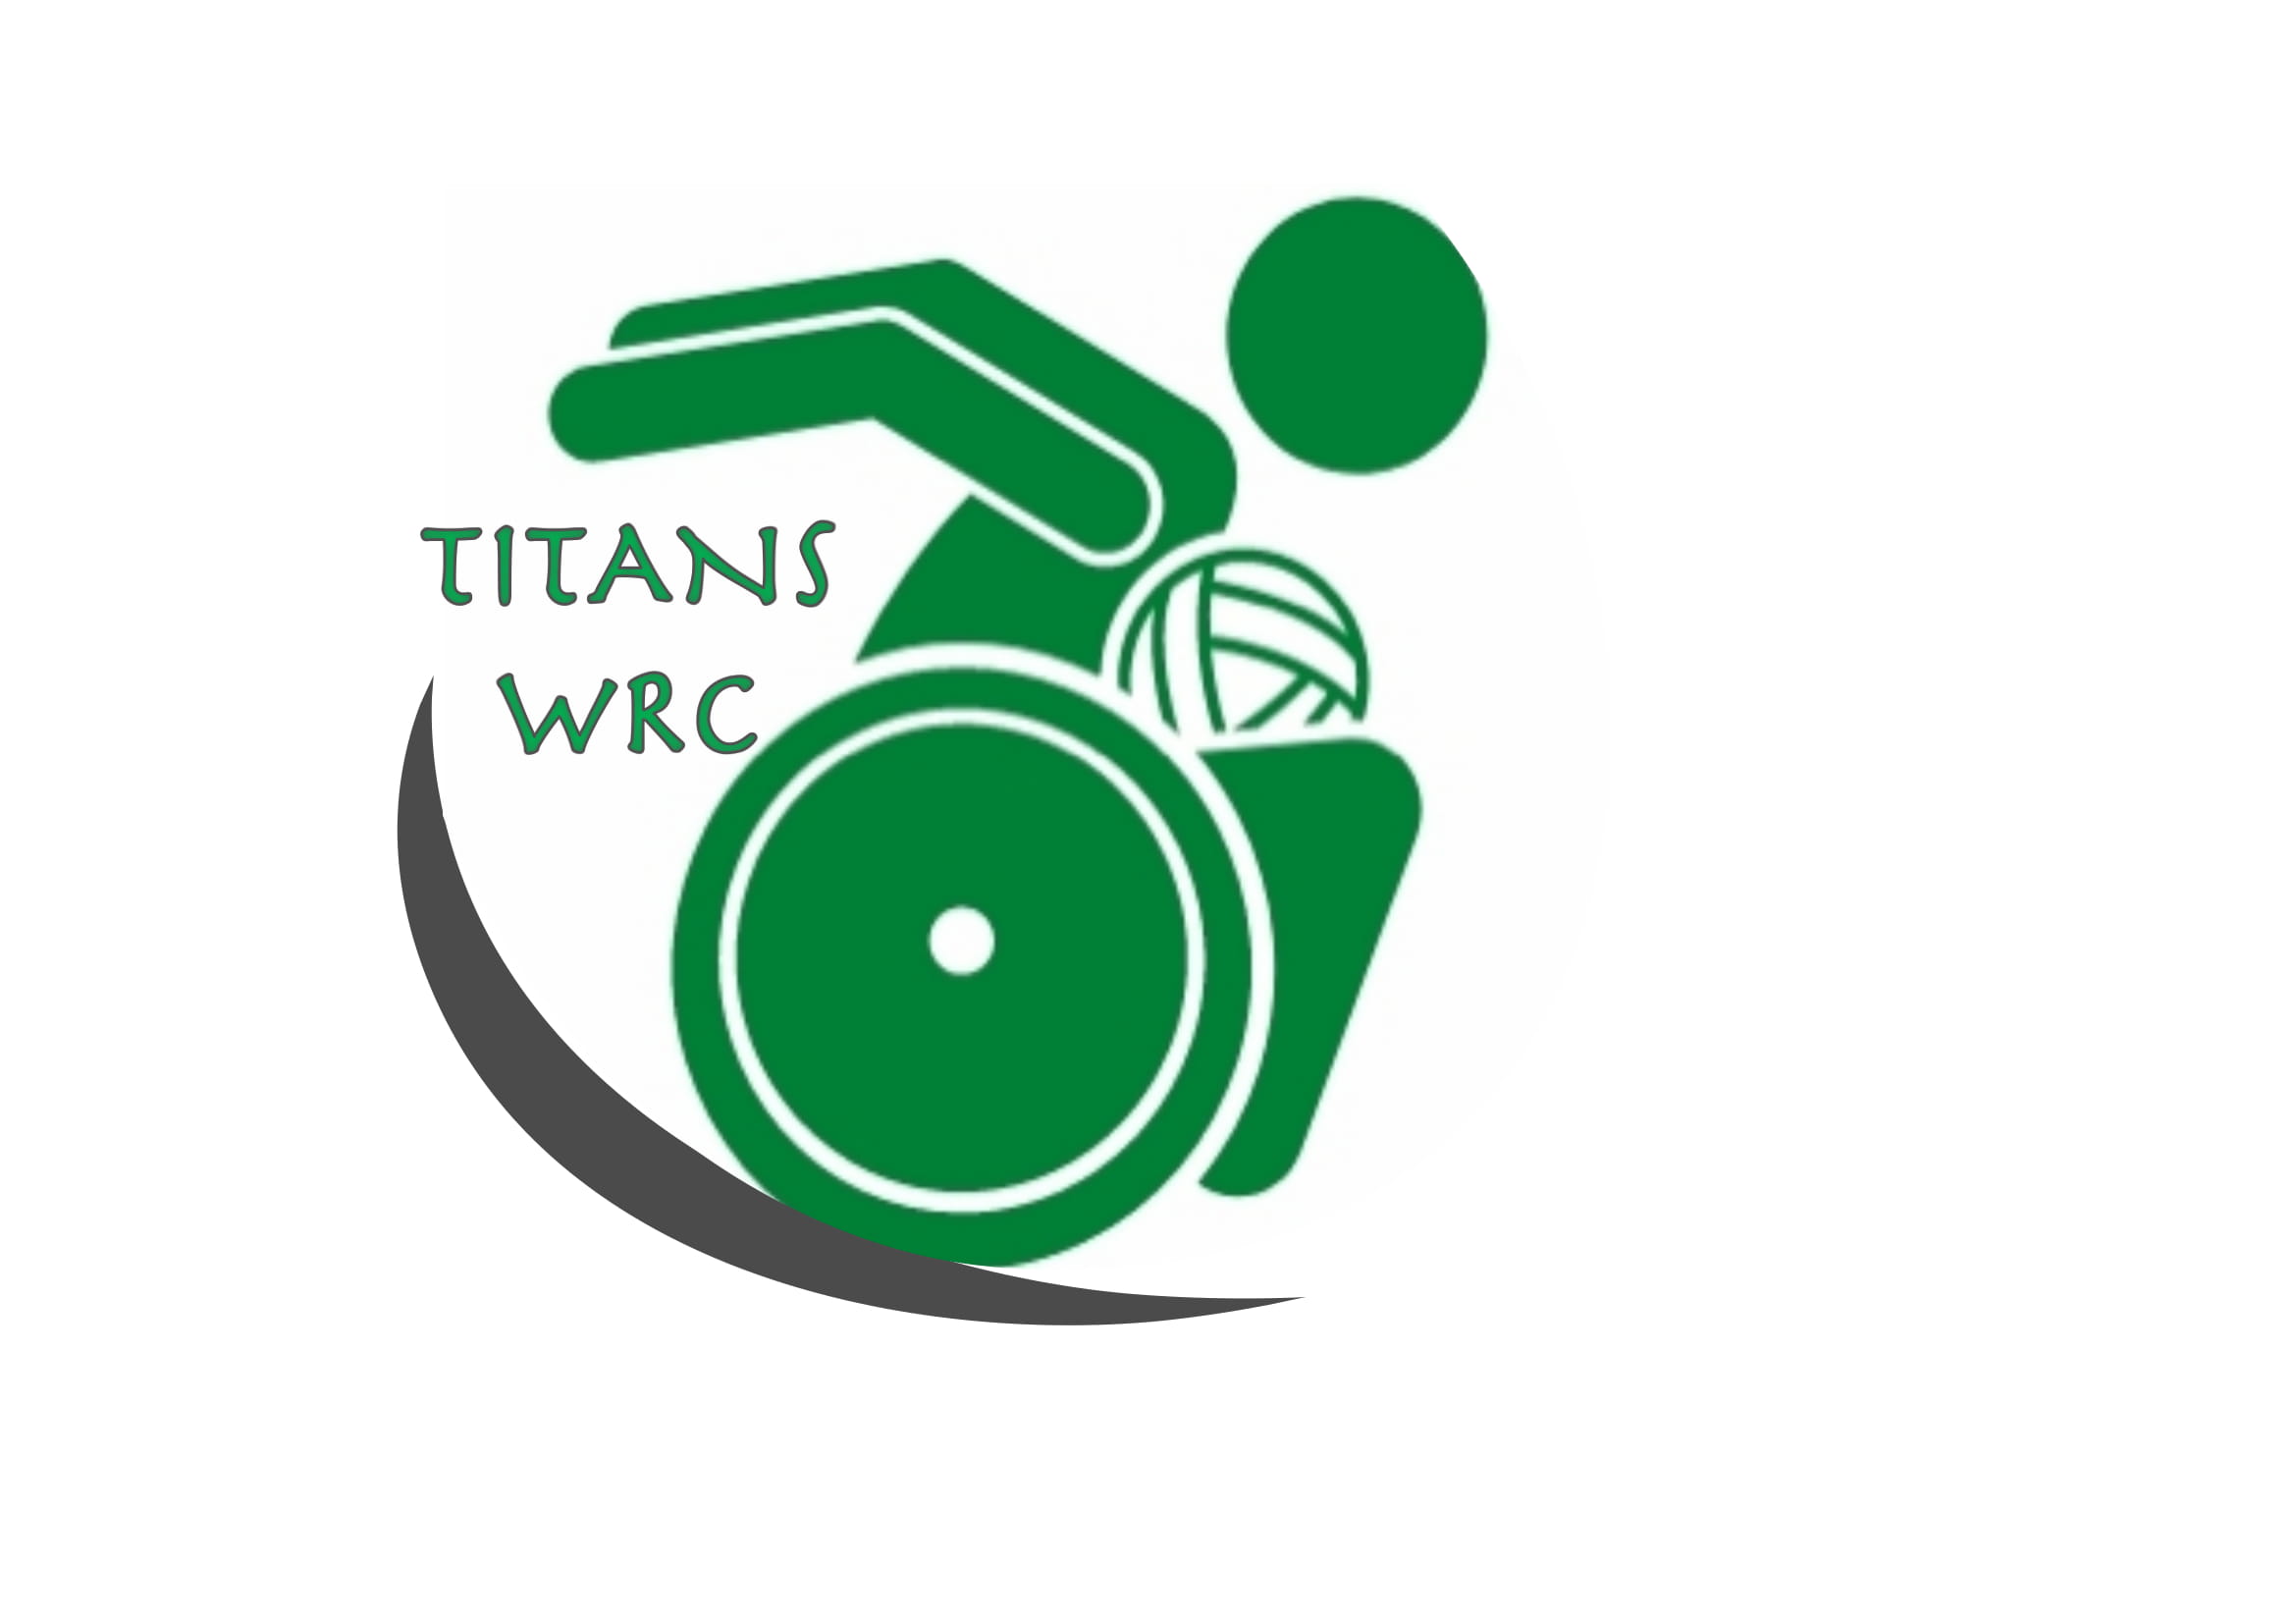 TITANS WRC WARSZAWA